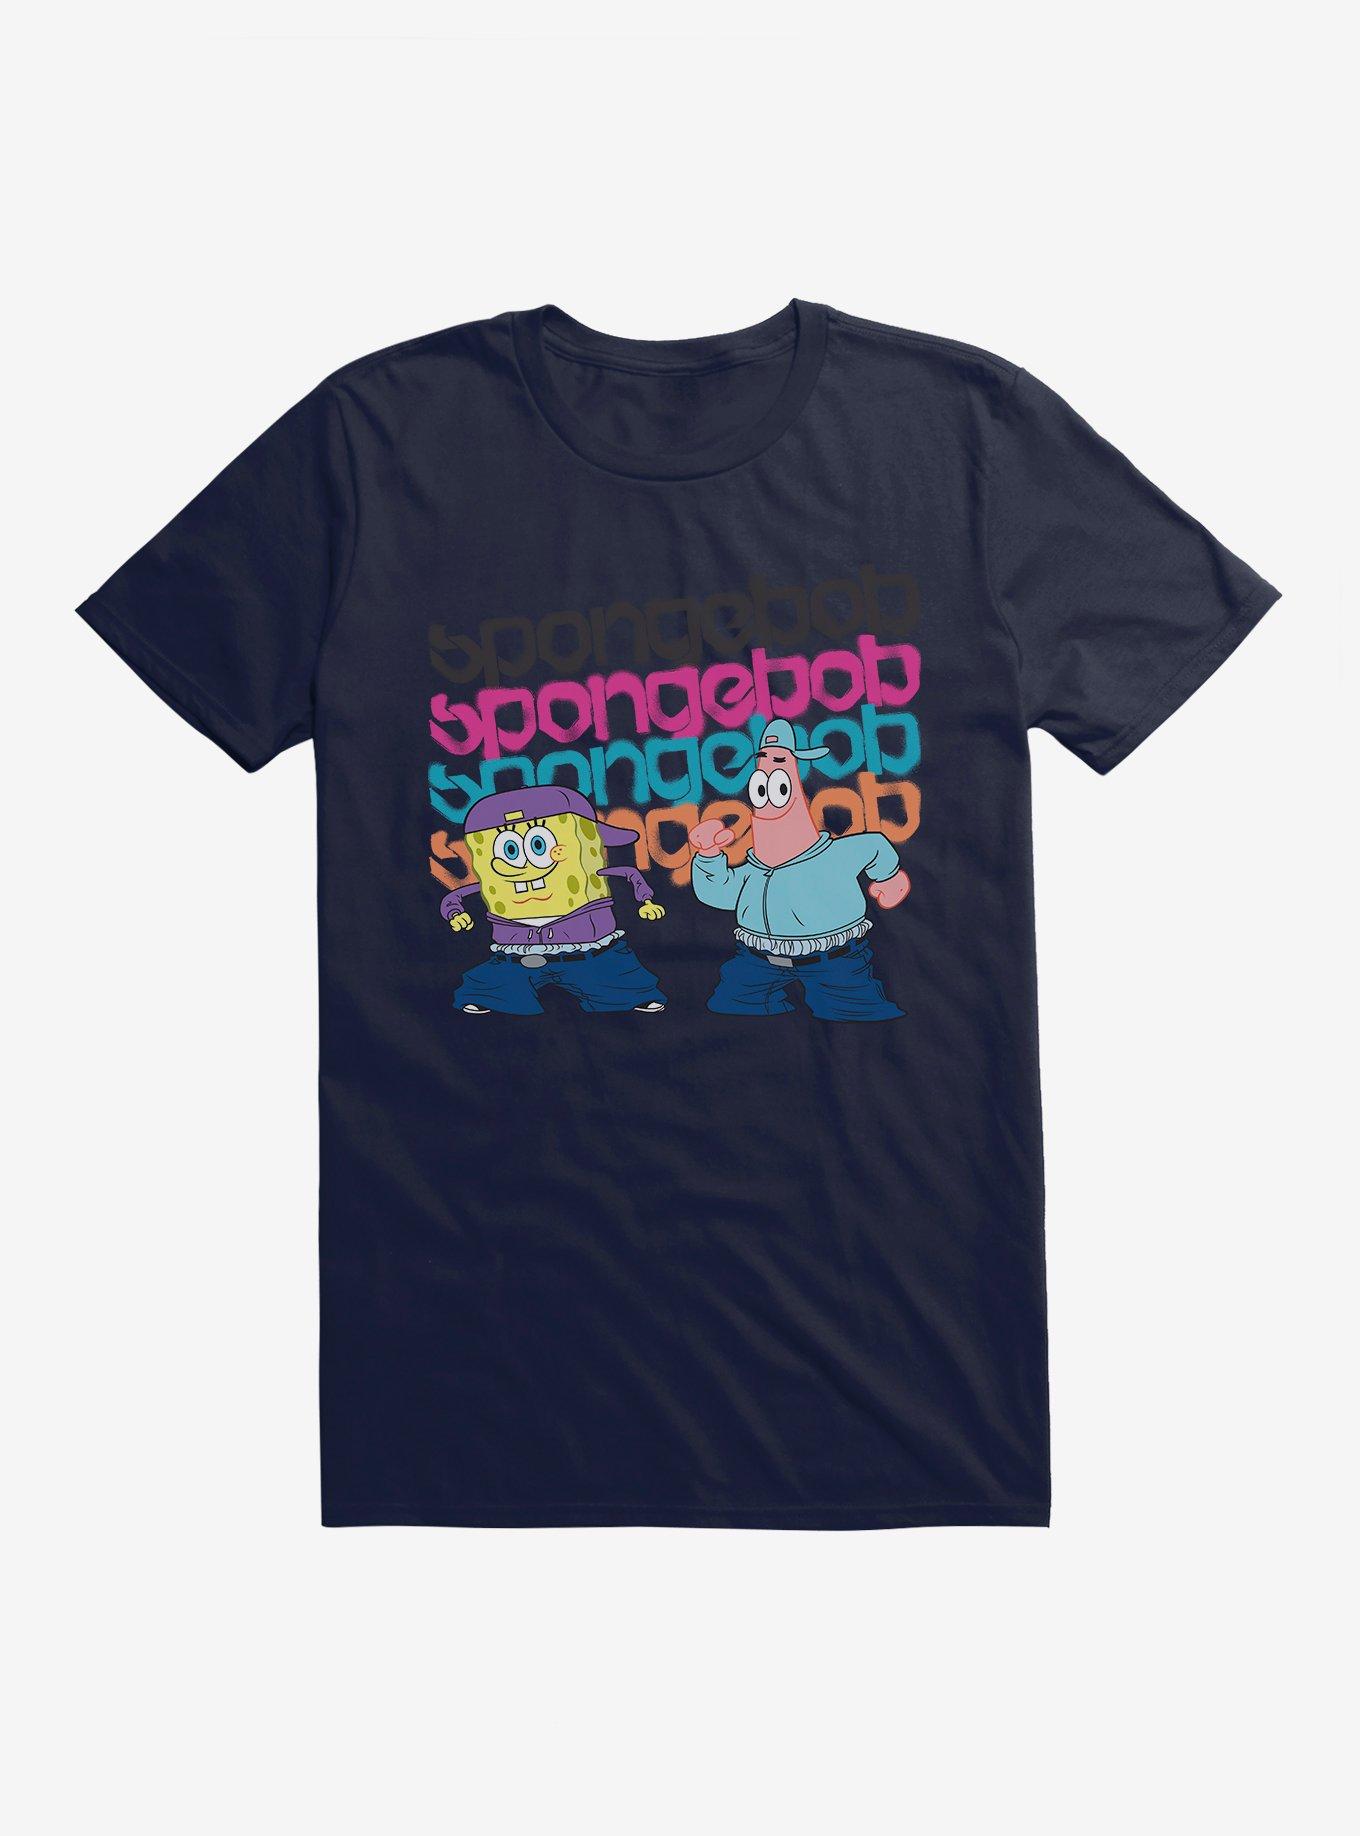 SpongeBob SquarePants Dance Crew SpongeBob Patrick T-Shirt, , hi-res